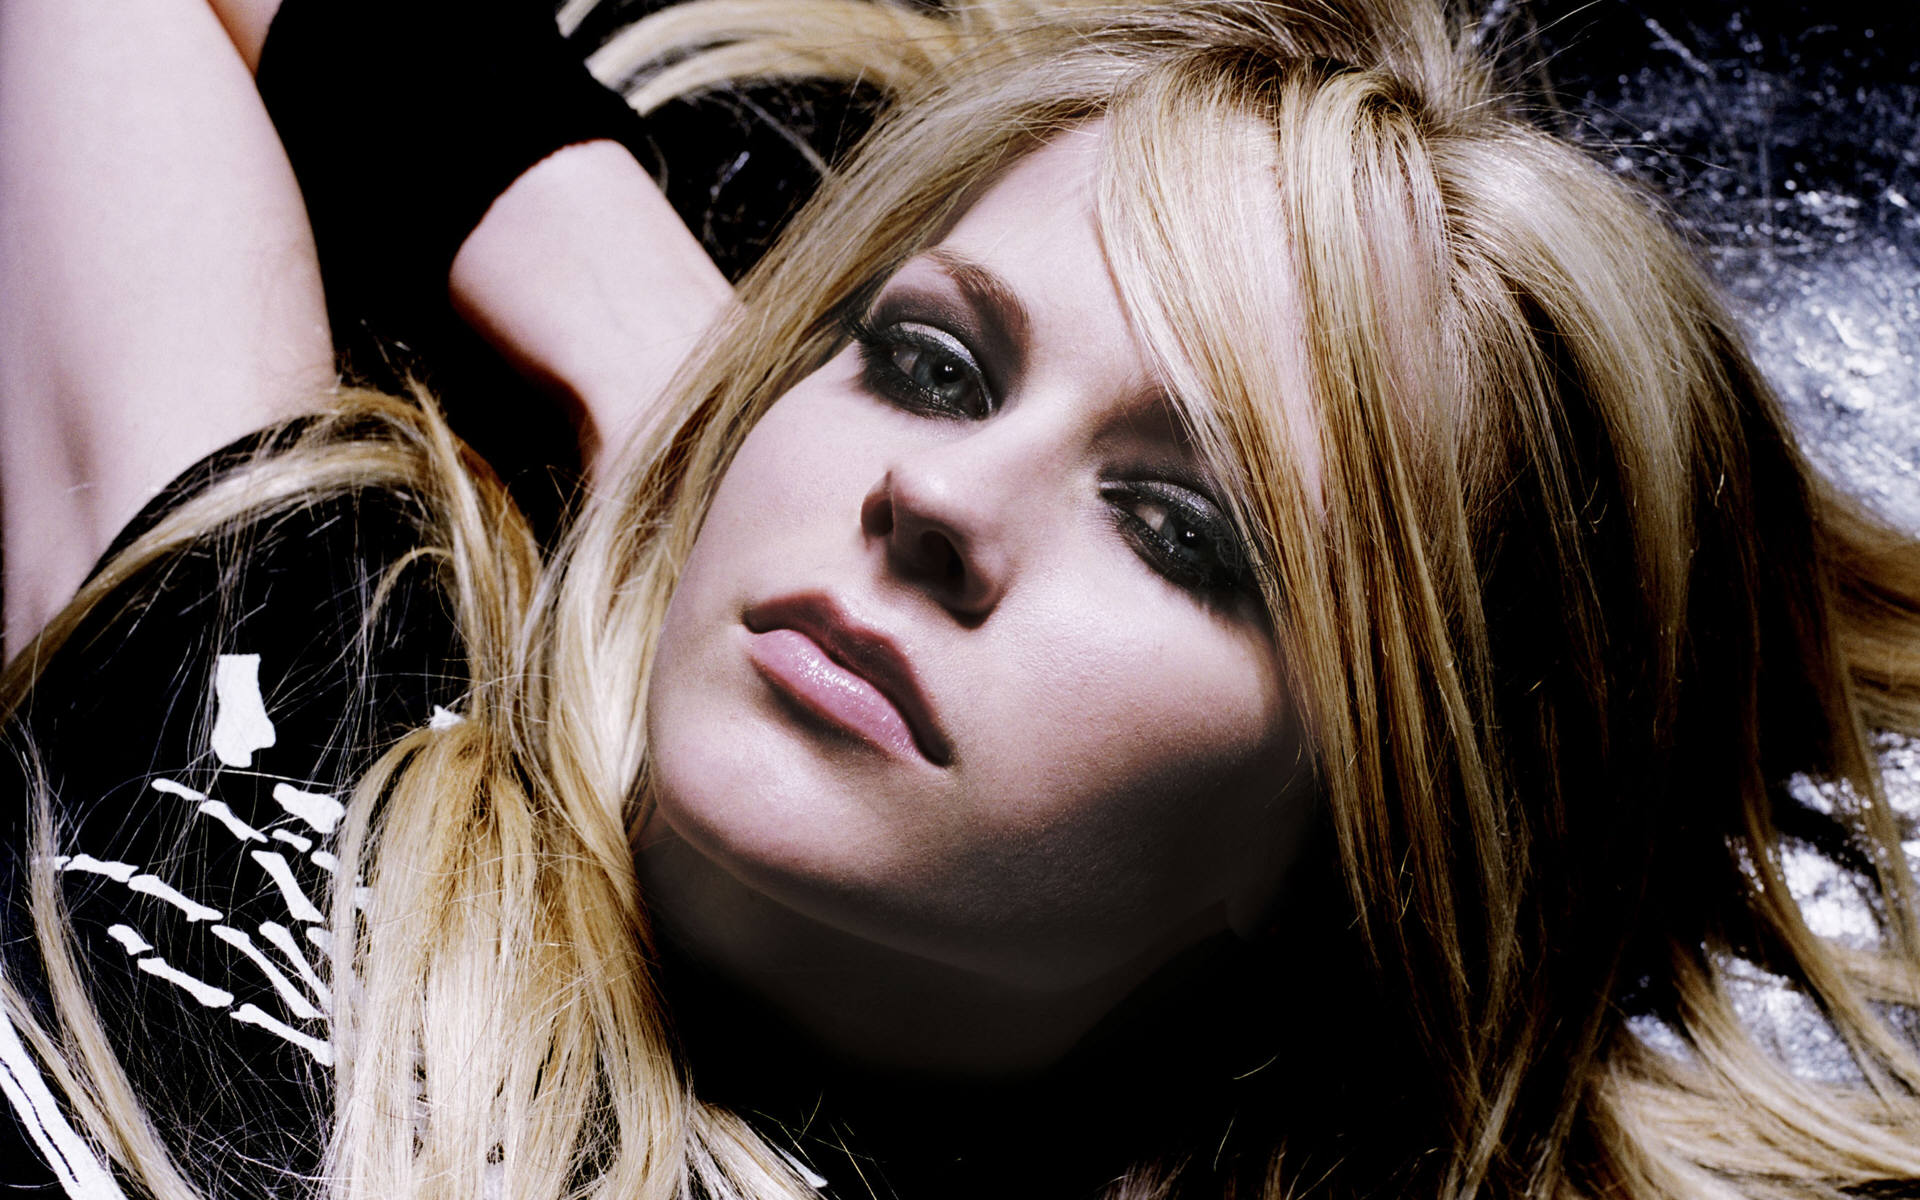 Free Images  Avril Lavigne